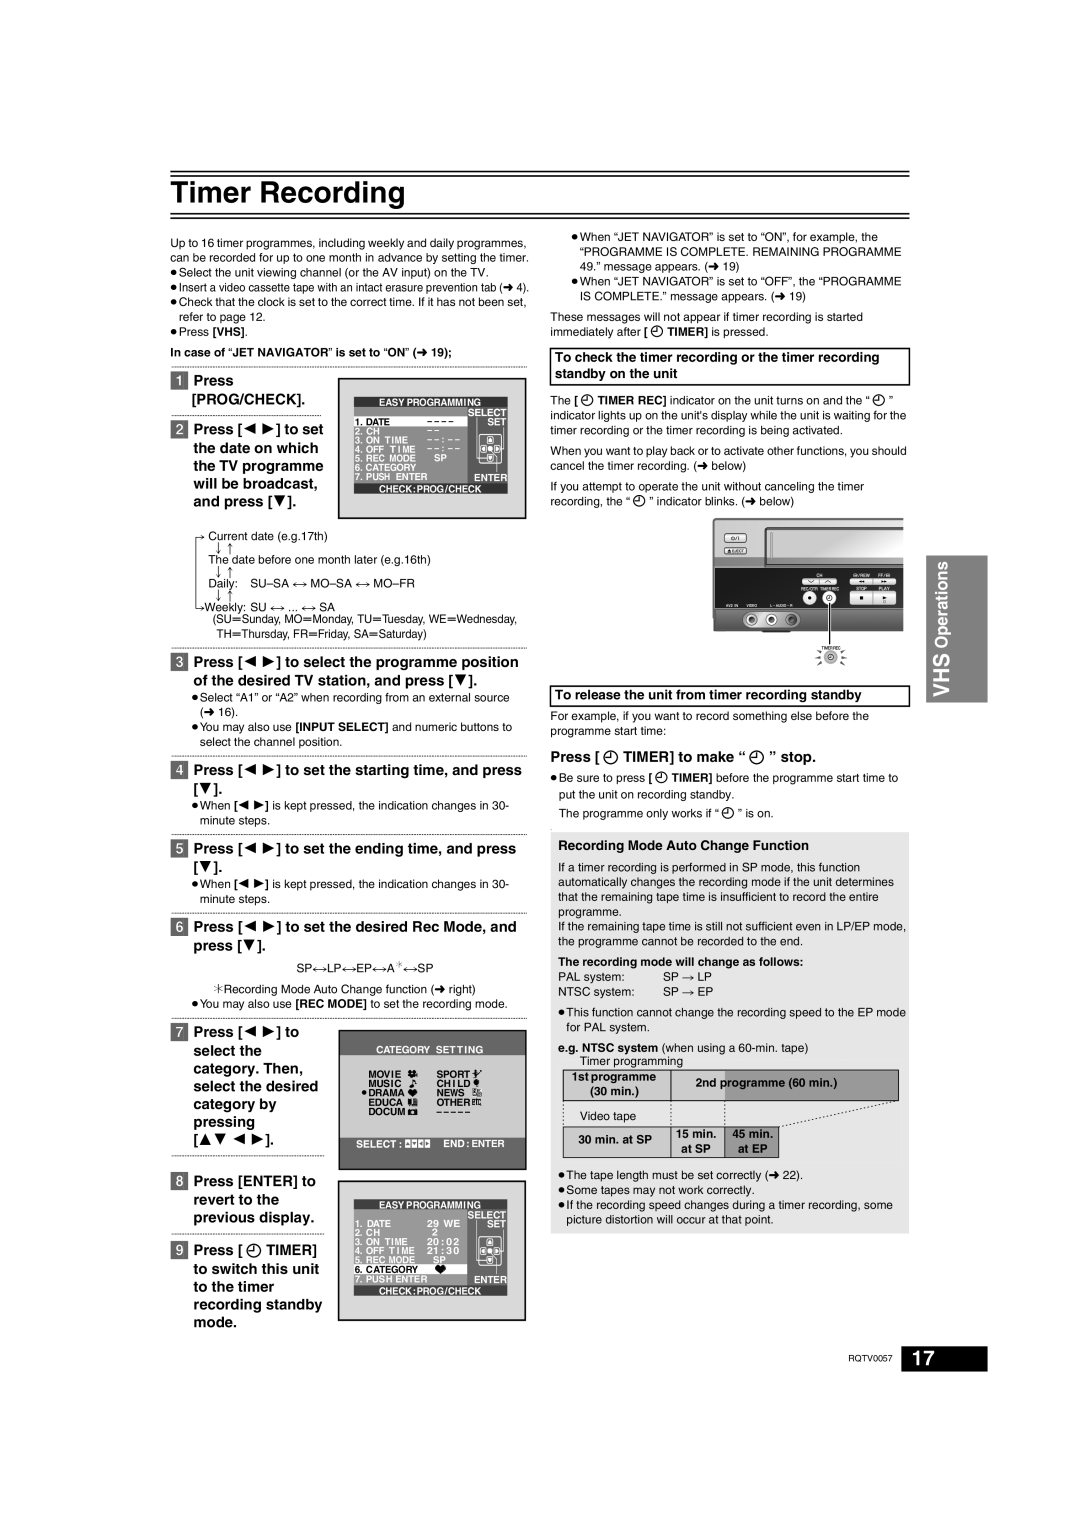 Panasonic NV-VP33 Series Timer Recording, Press PROG/CHECK, Press 2 1 to select the programme position, VHS Operations 